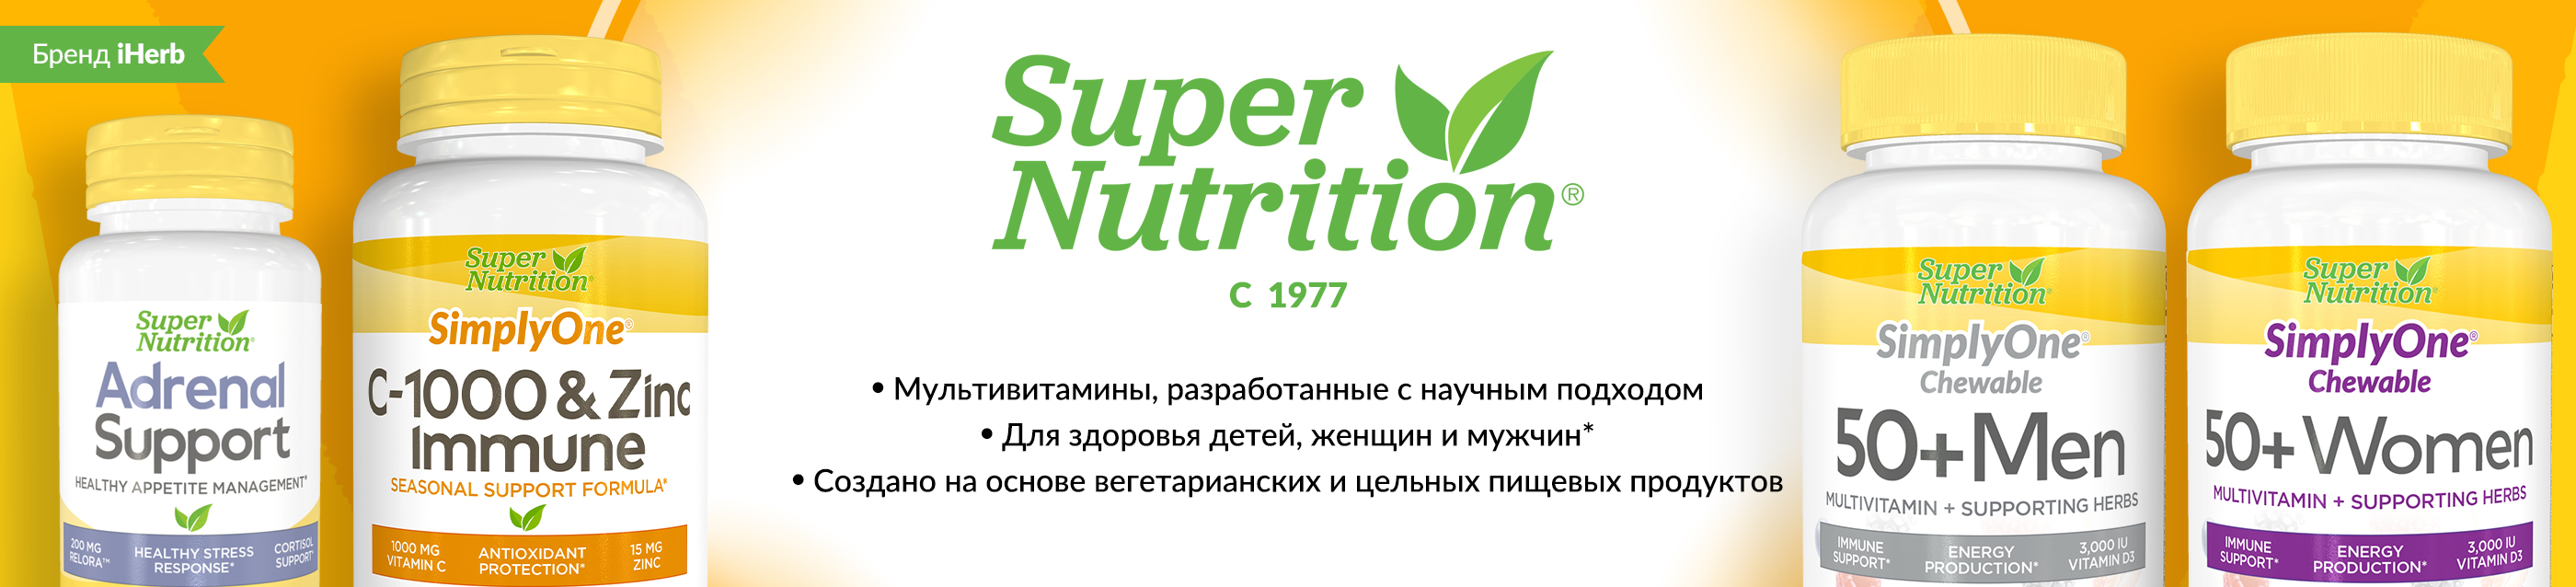 Super Nutrition